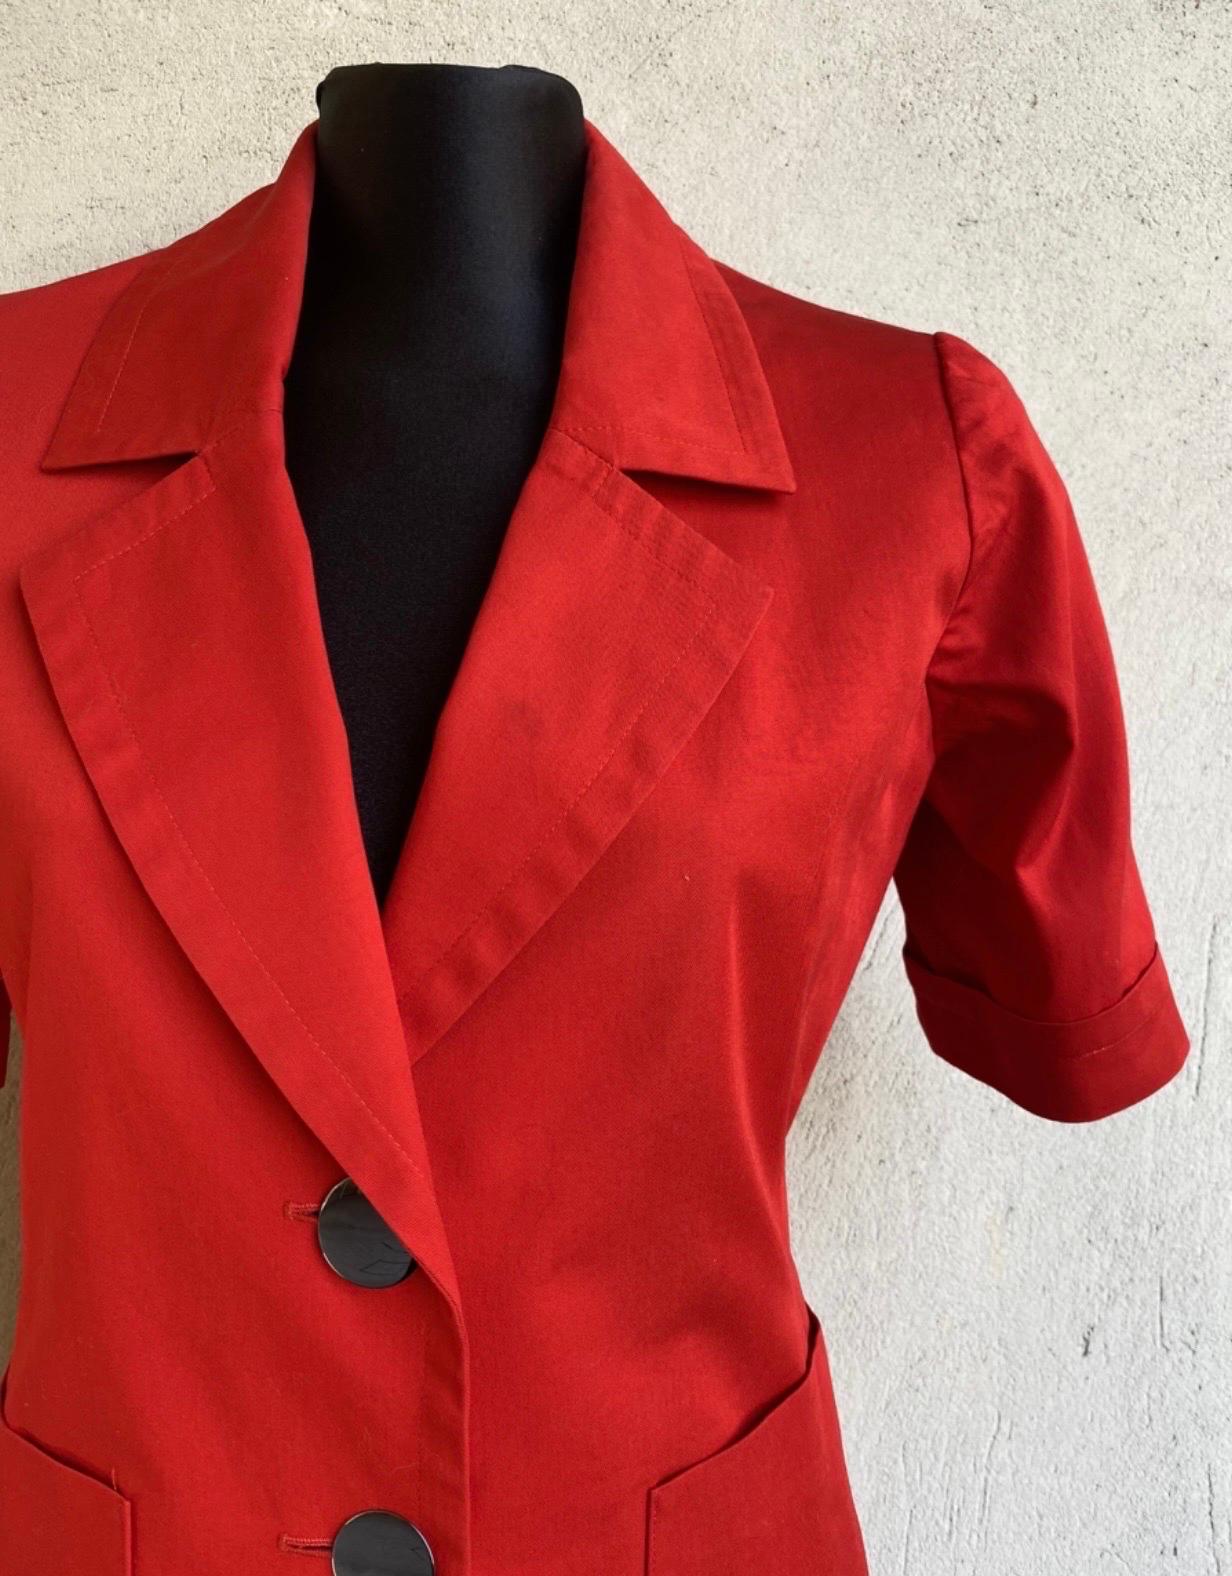 Yves Saint Laurent suit. Vintage piece. 
Jacket + skirt. French size 38. Featuring short-sleeved jacket in red cotton and matching skirt.
jacket measurements: shoulder 40 cm, sleeve 29 cm, length 60 cm, chest cm 39, skirt measurements: waist 31 cm,